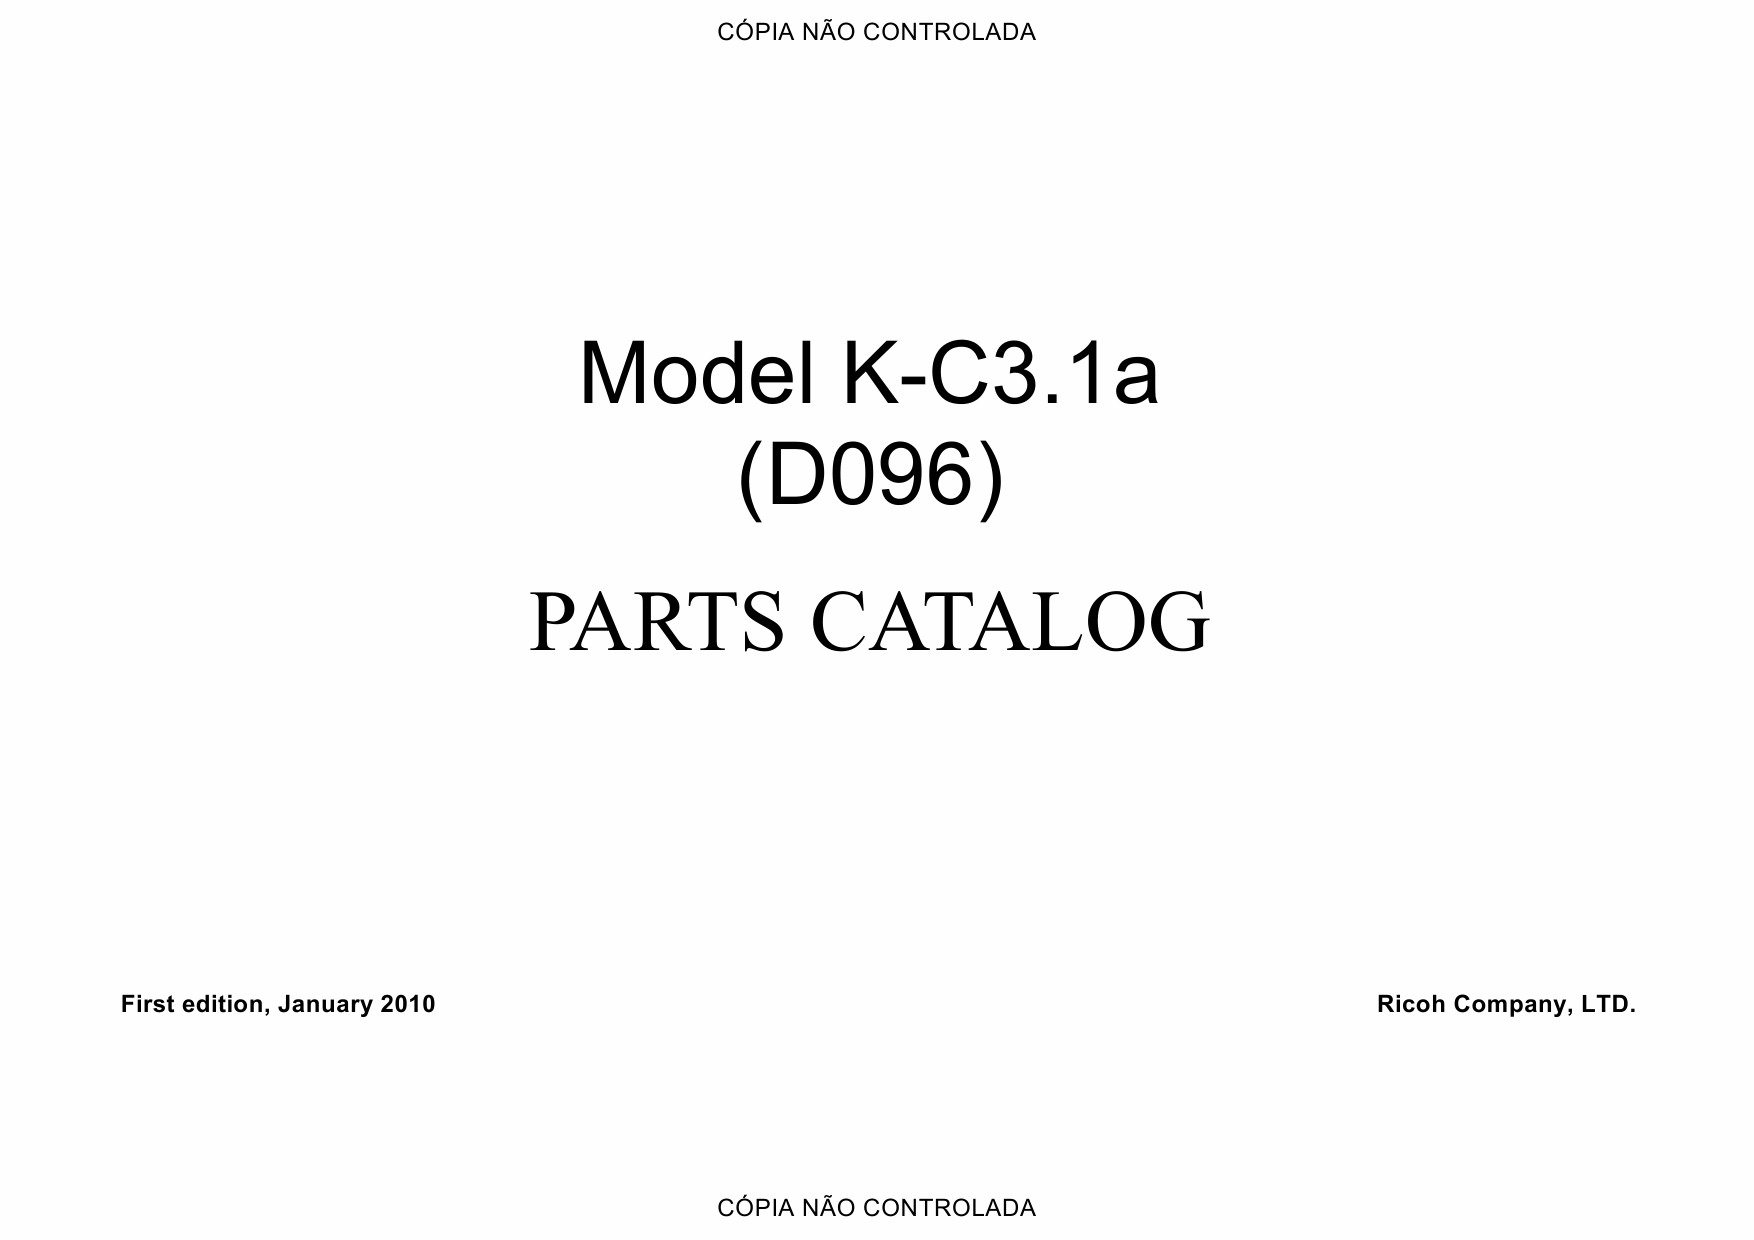 RICOH Aficio MP-1900 D096 Parts Catalog-1